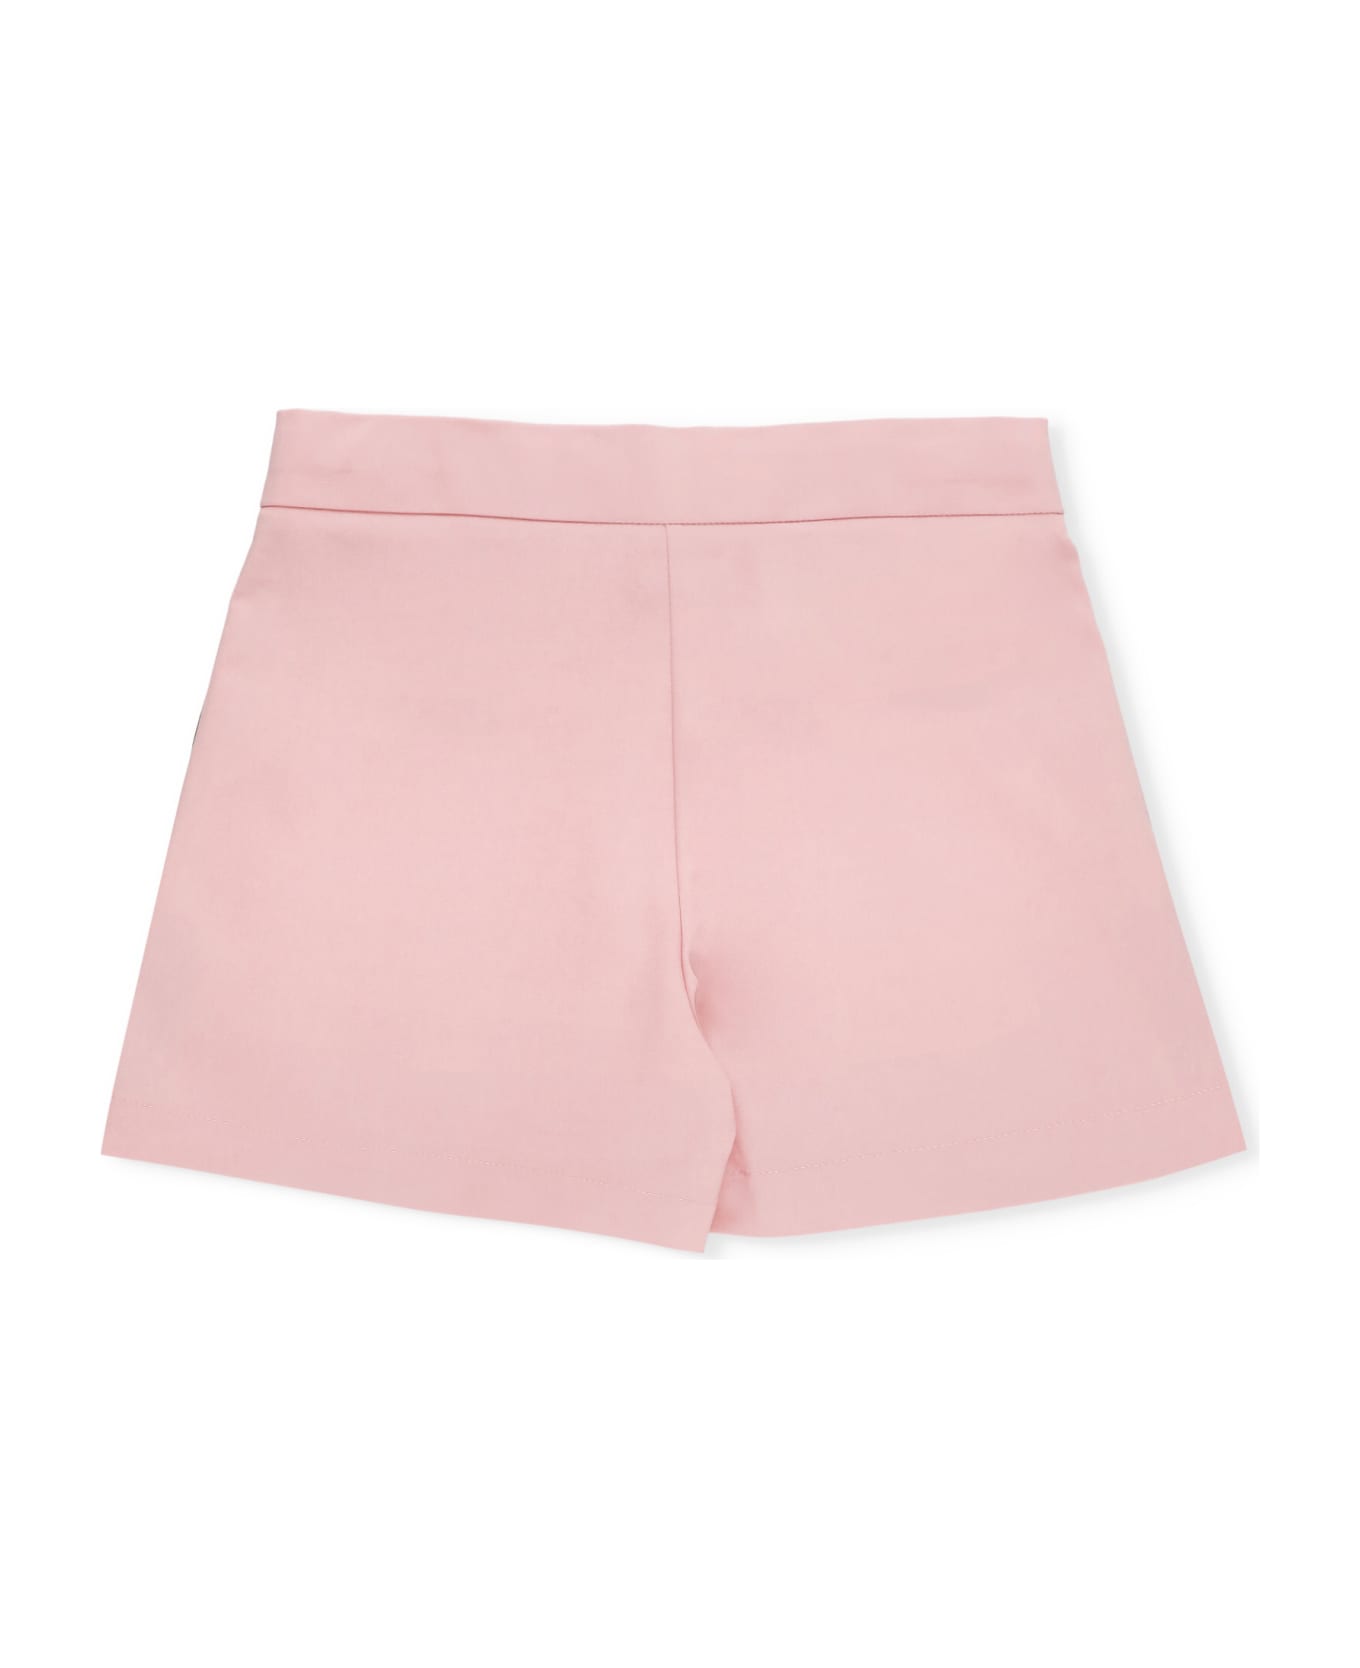 MSGM Cotton Blend Shorts - Pink